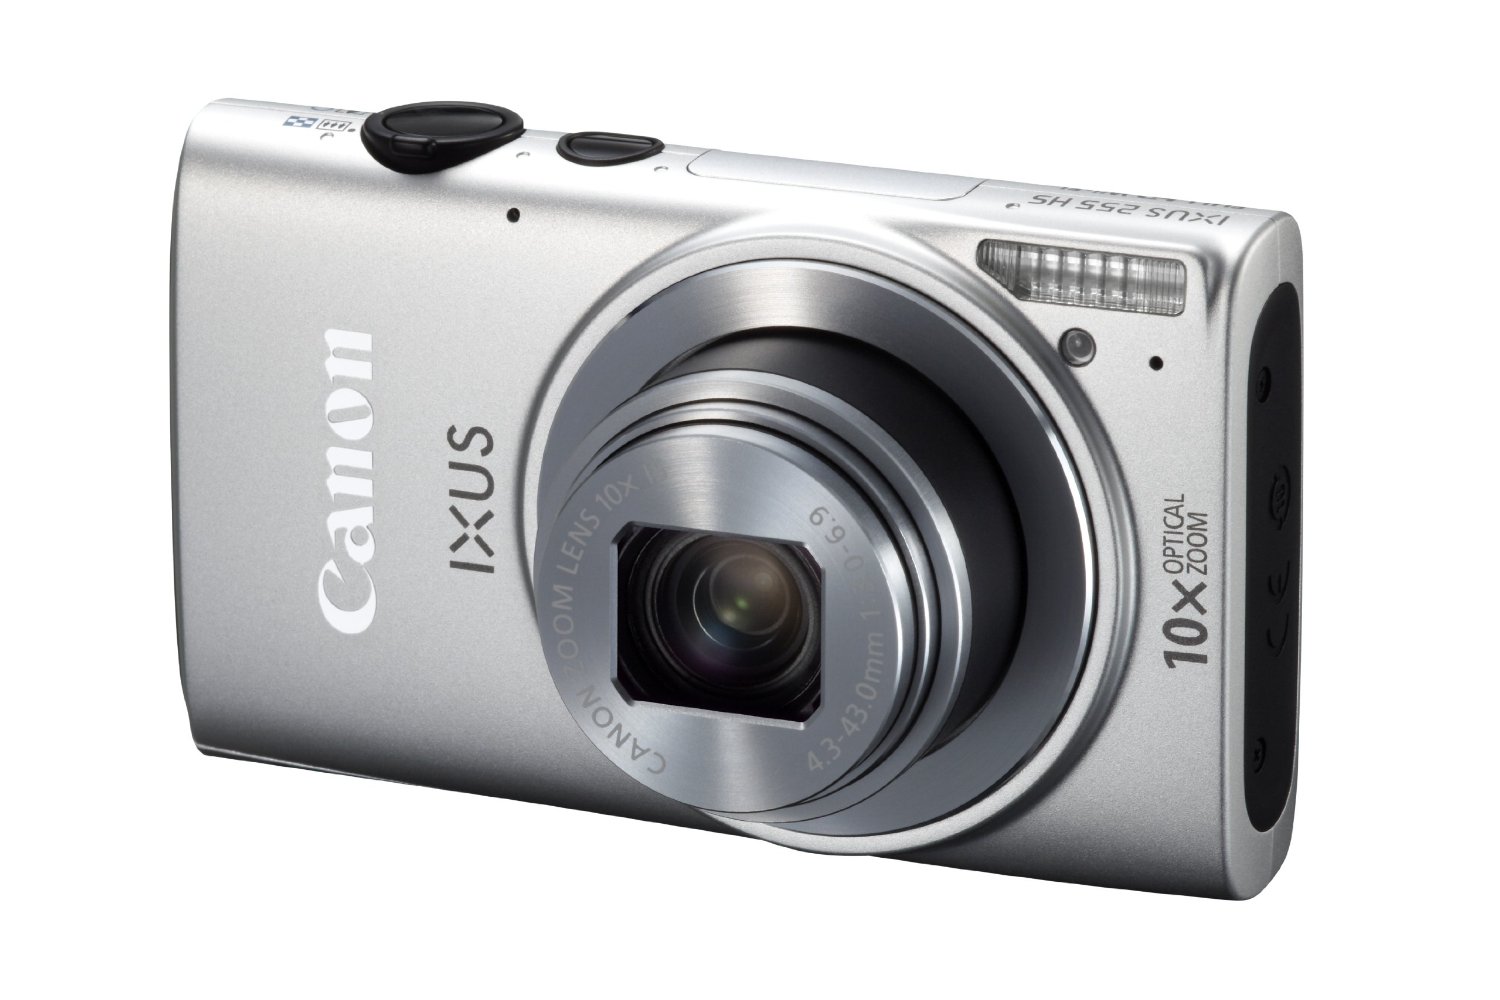 Canon IXUS 255 HS Digitalkamera Test 2017
